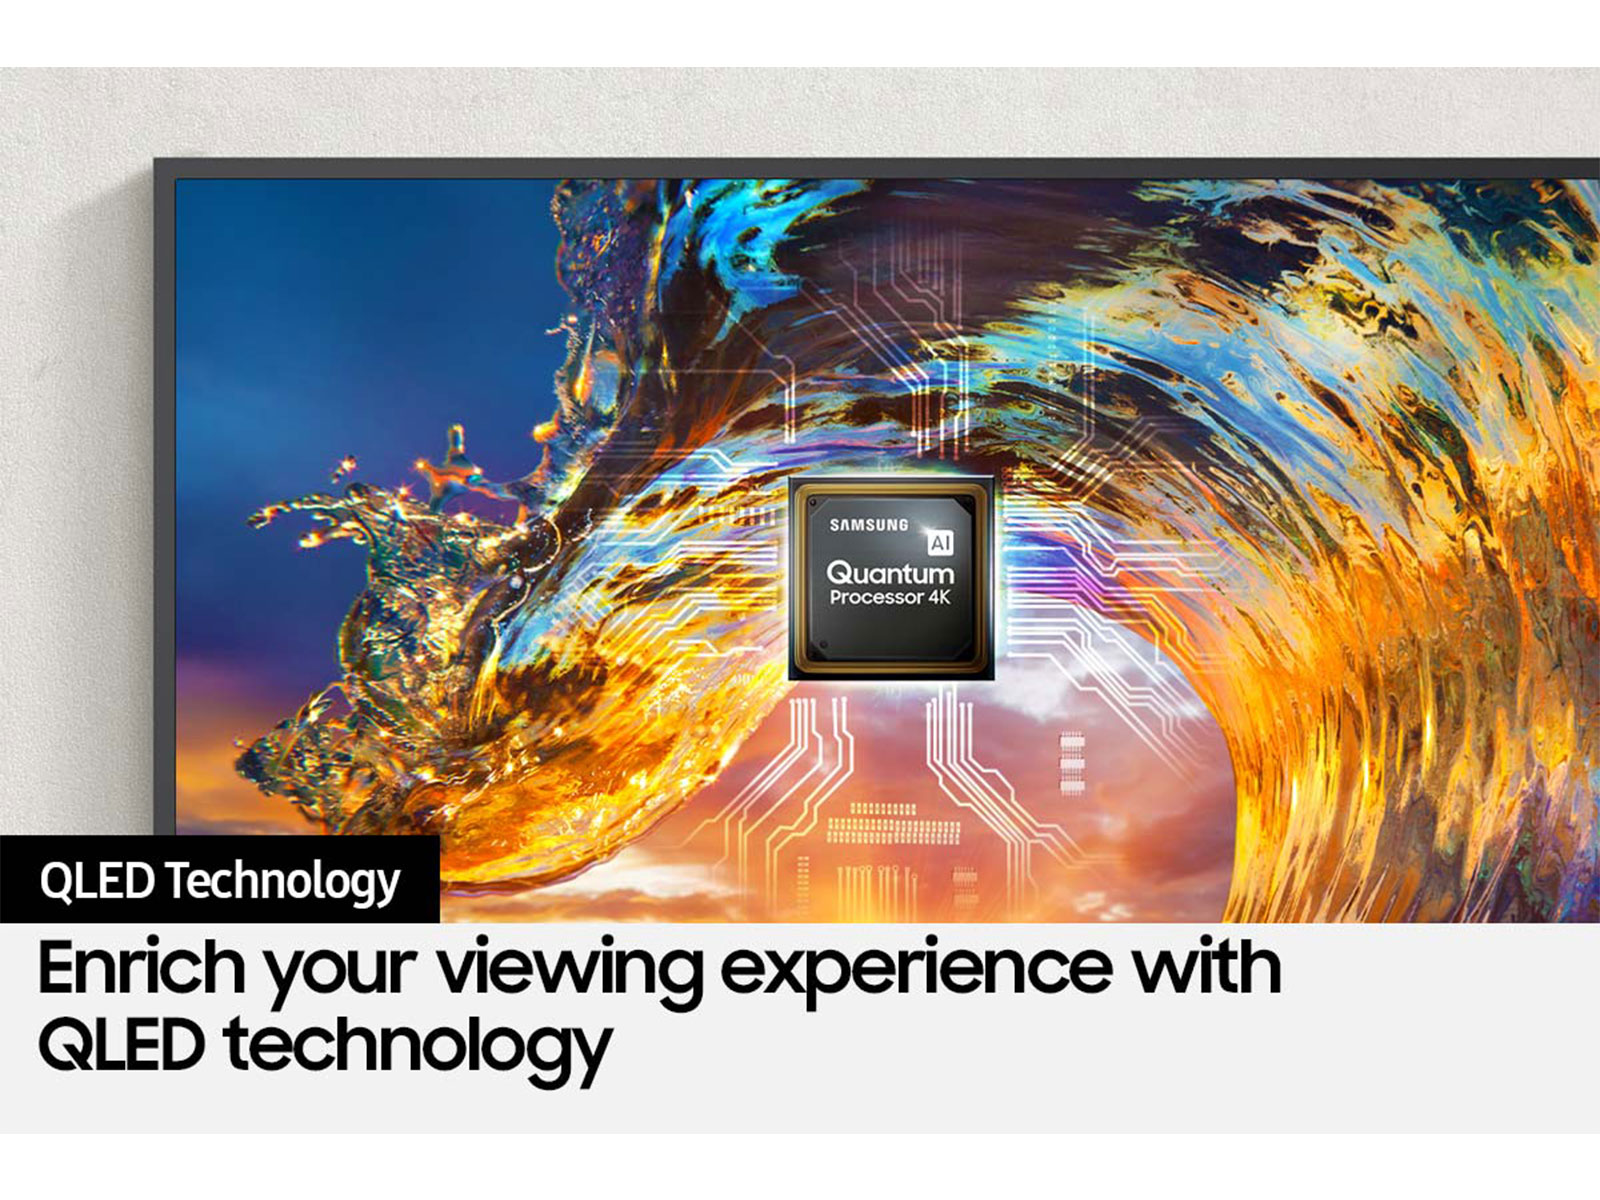 Best Buy: Samsung 85 Class The Frame Series LED 4K UHD Smart Tizen TV  QN85LS03AAFXZA